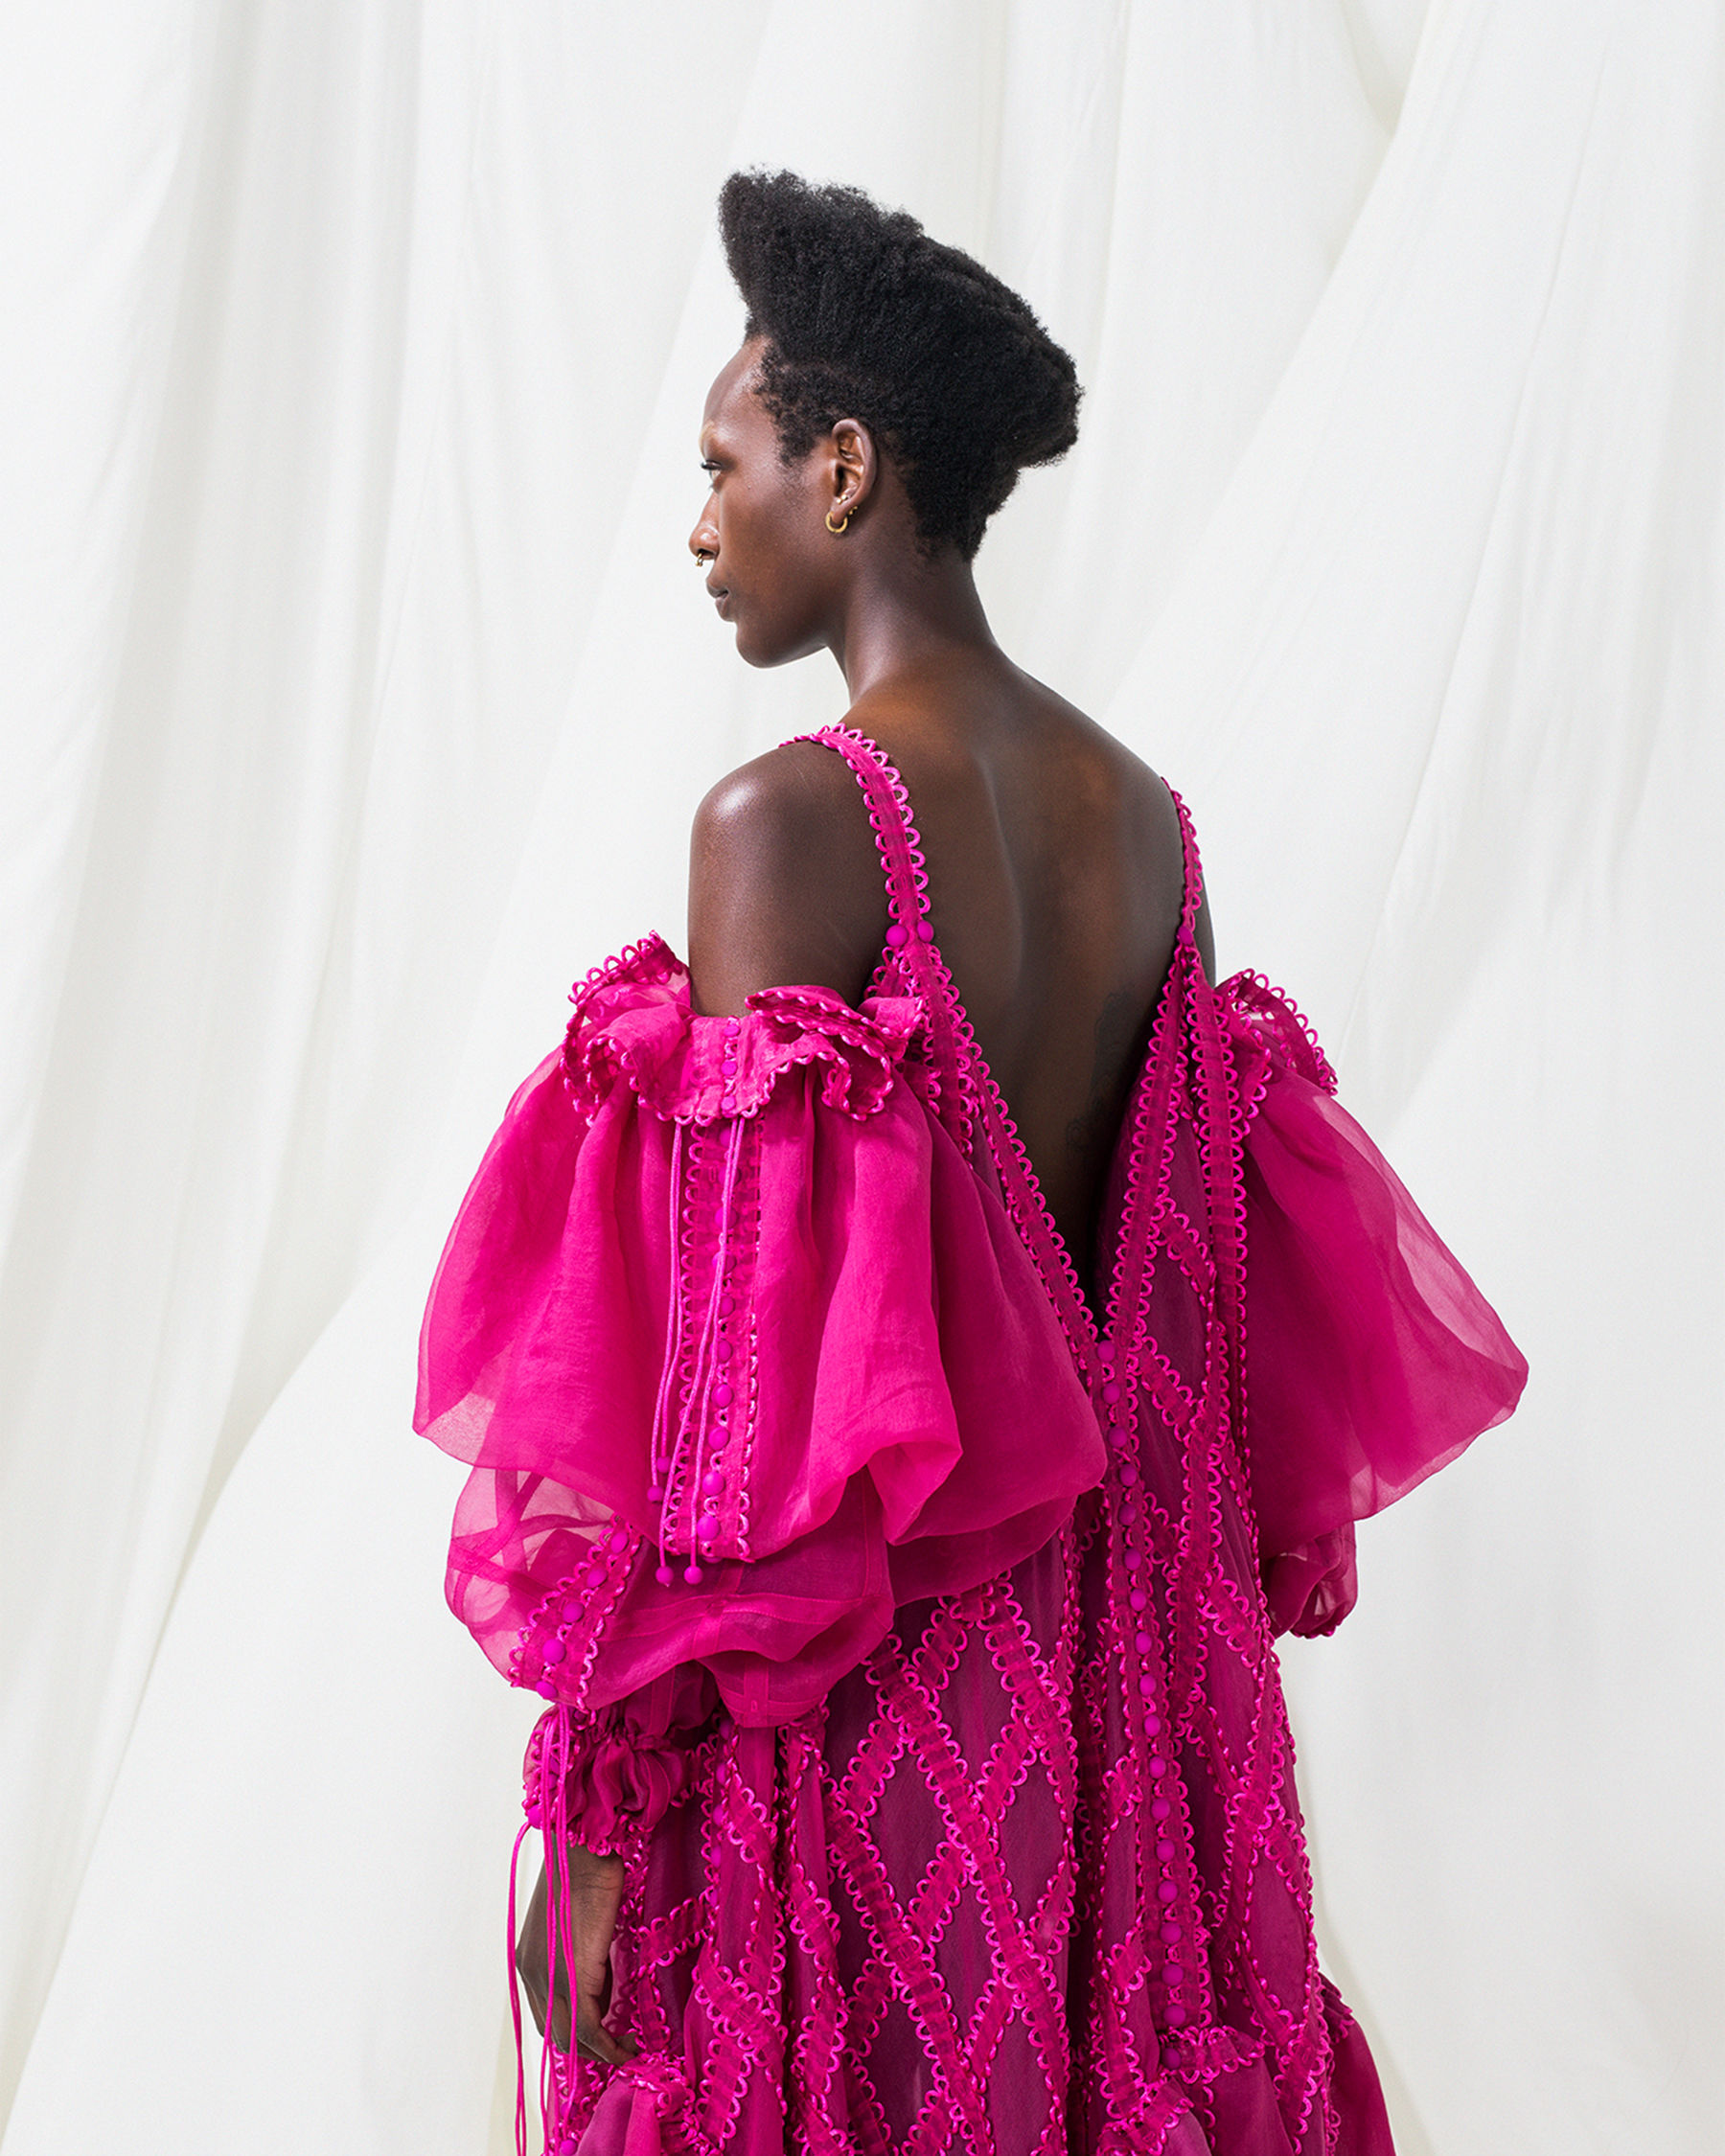 Bright pink modular dress on a model.